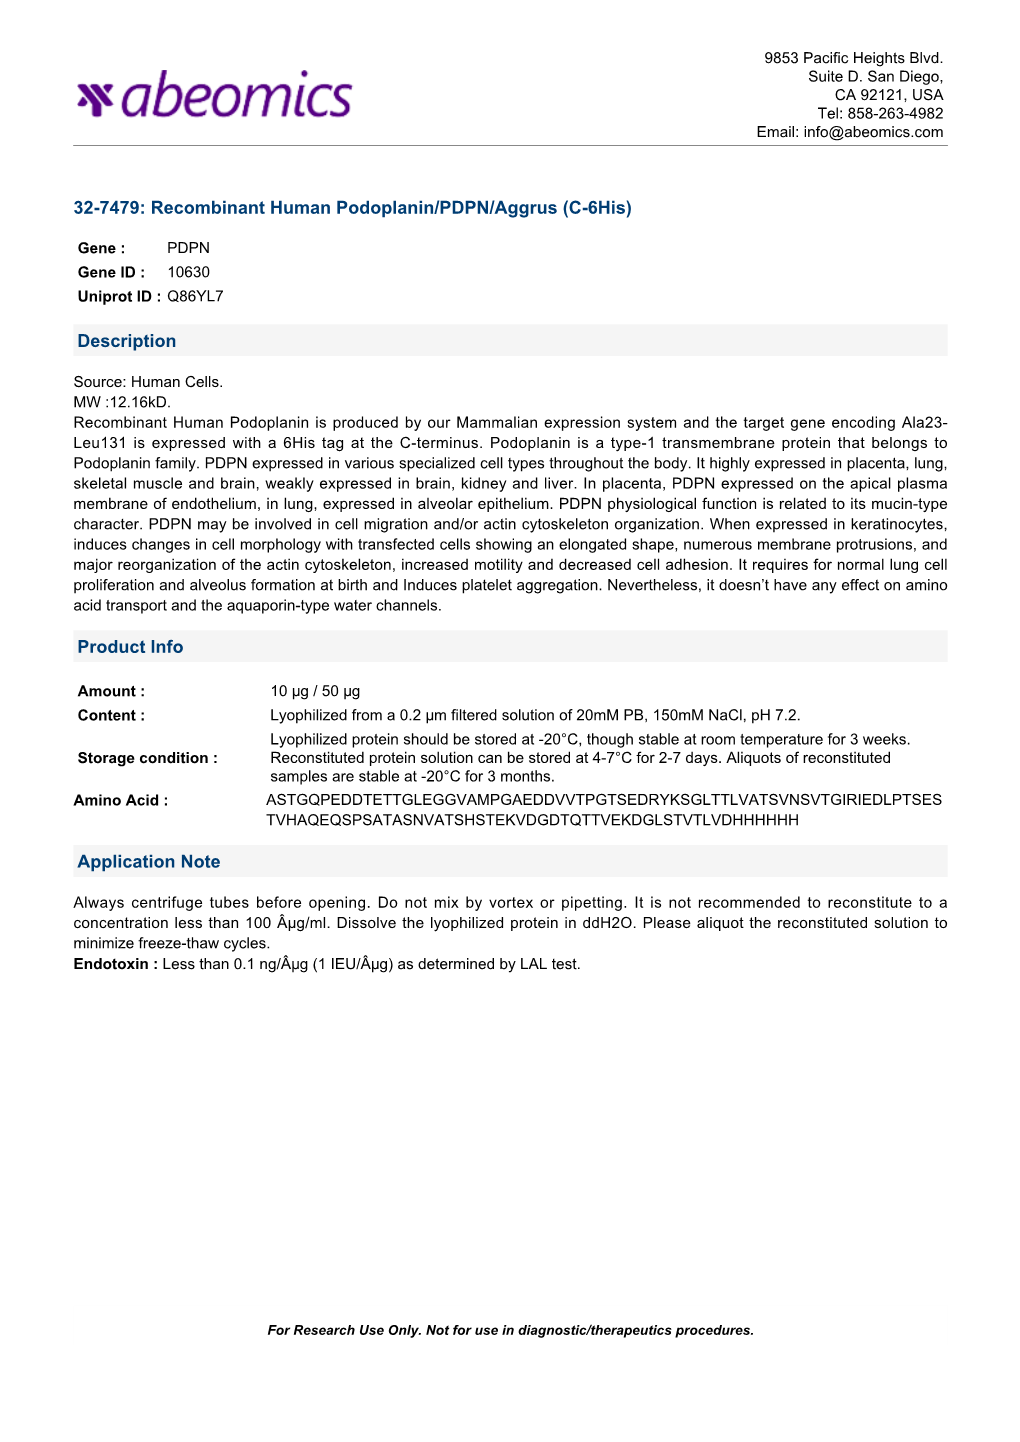 Recombinant Human Podoplanin/PDPN/Aggrus (C-6His)